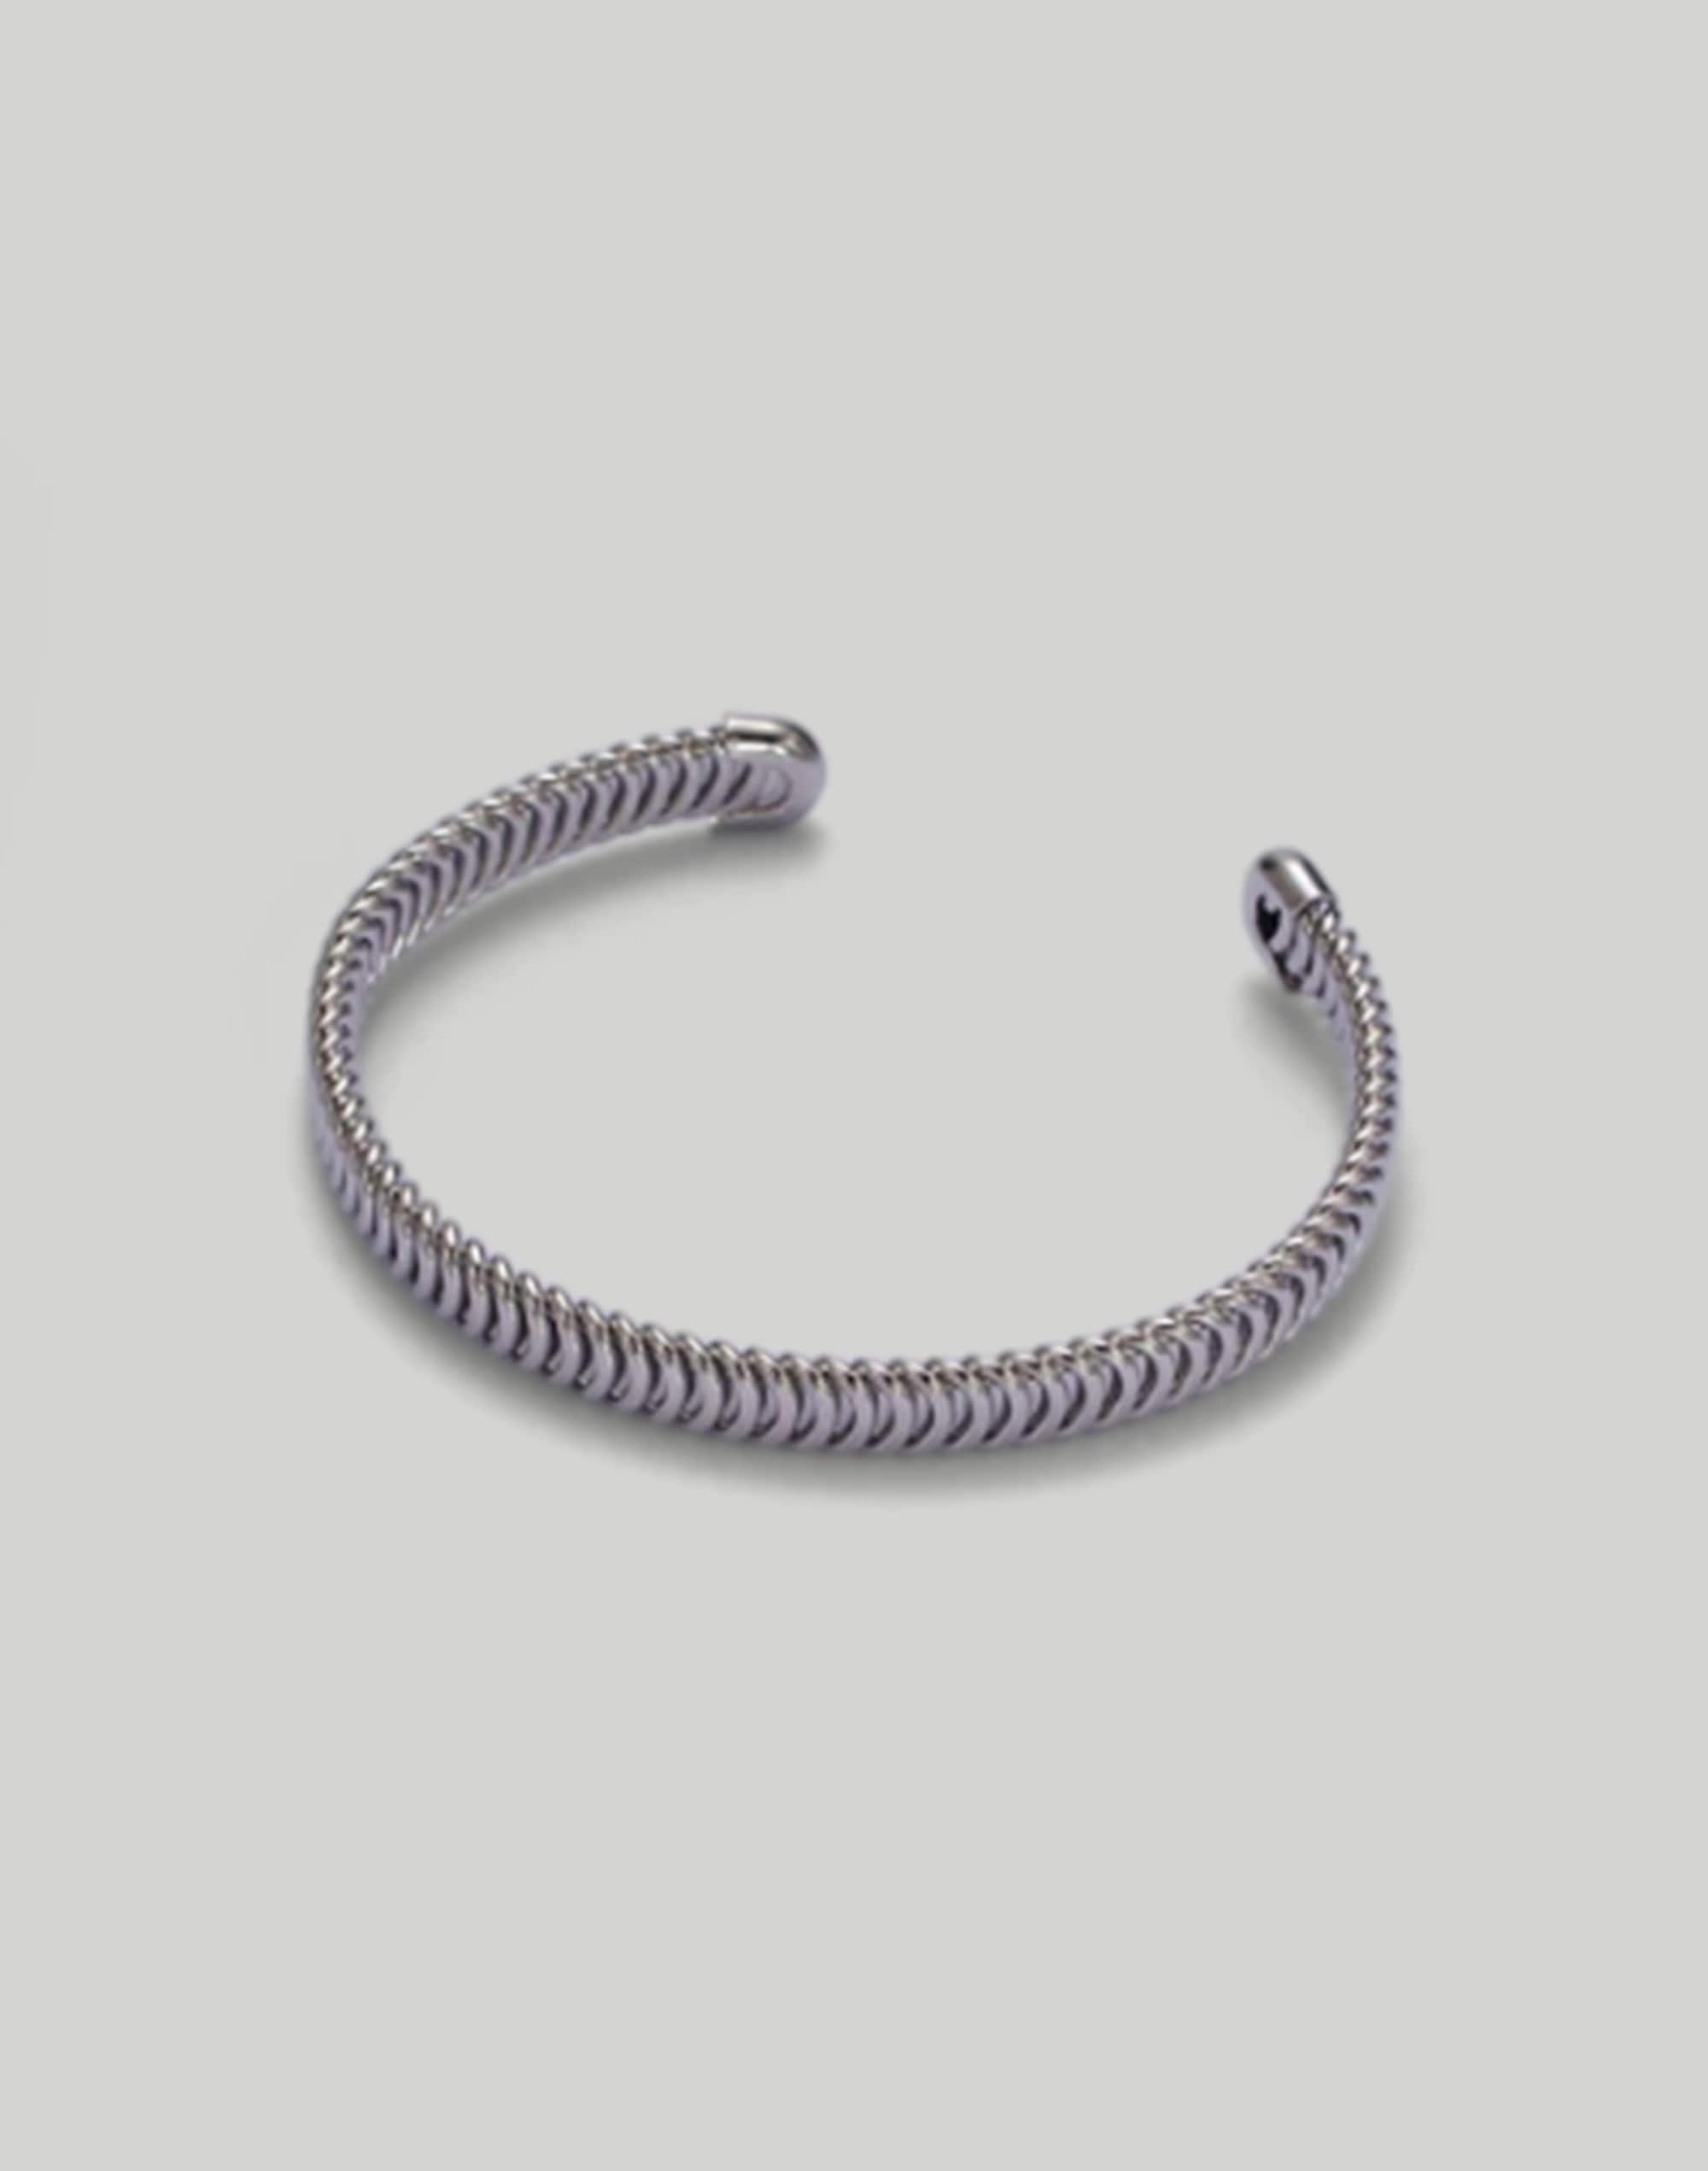 Abcrete & Co. The Textured Cuff Bracelet